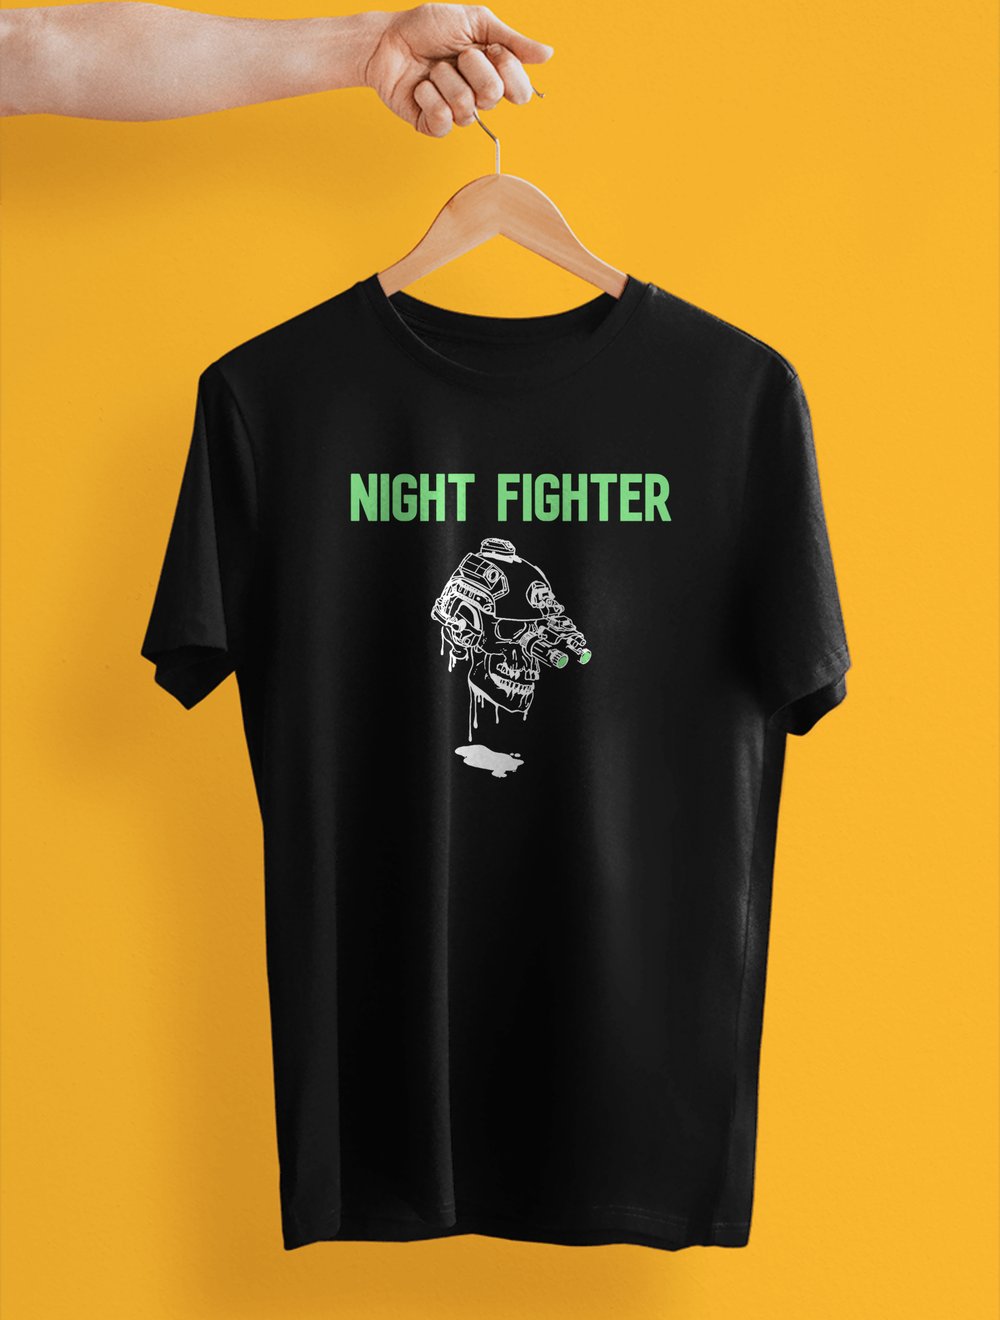 NIGHT FIGHTER